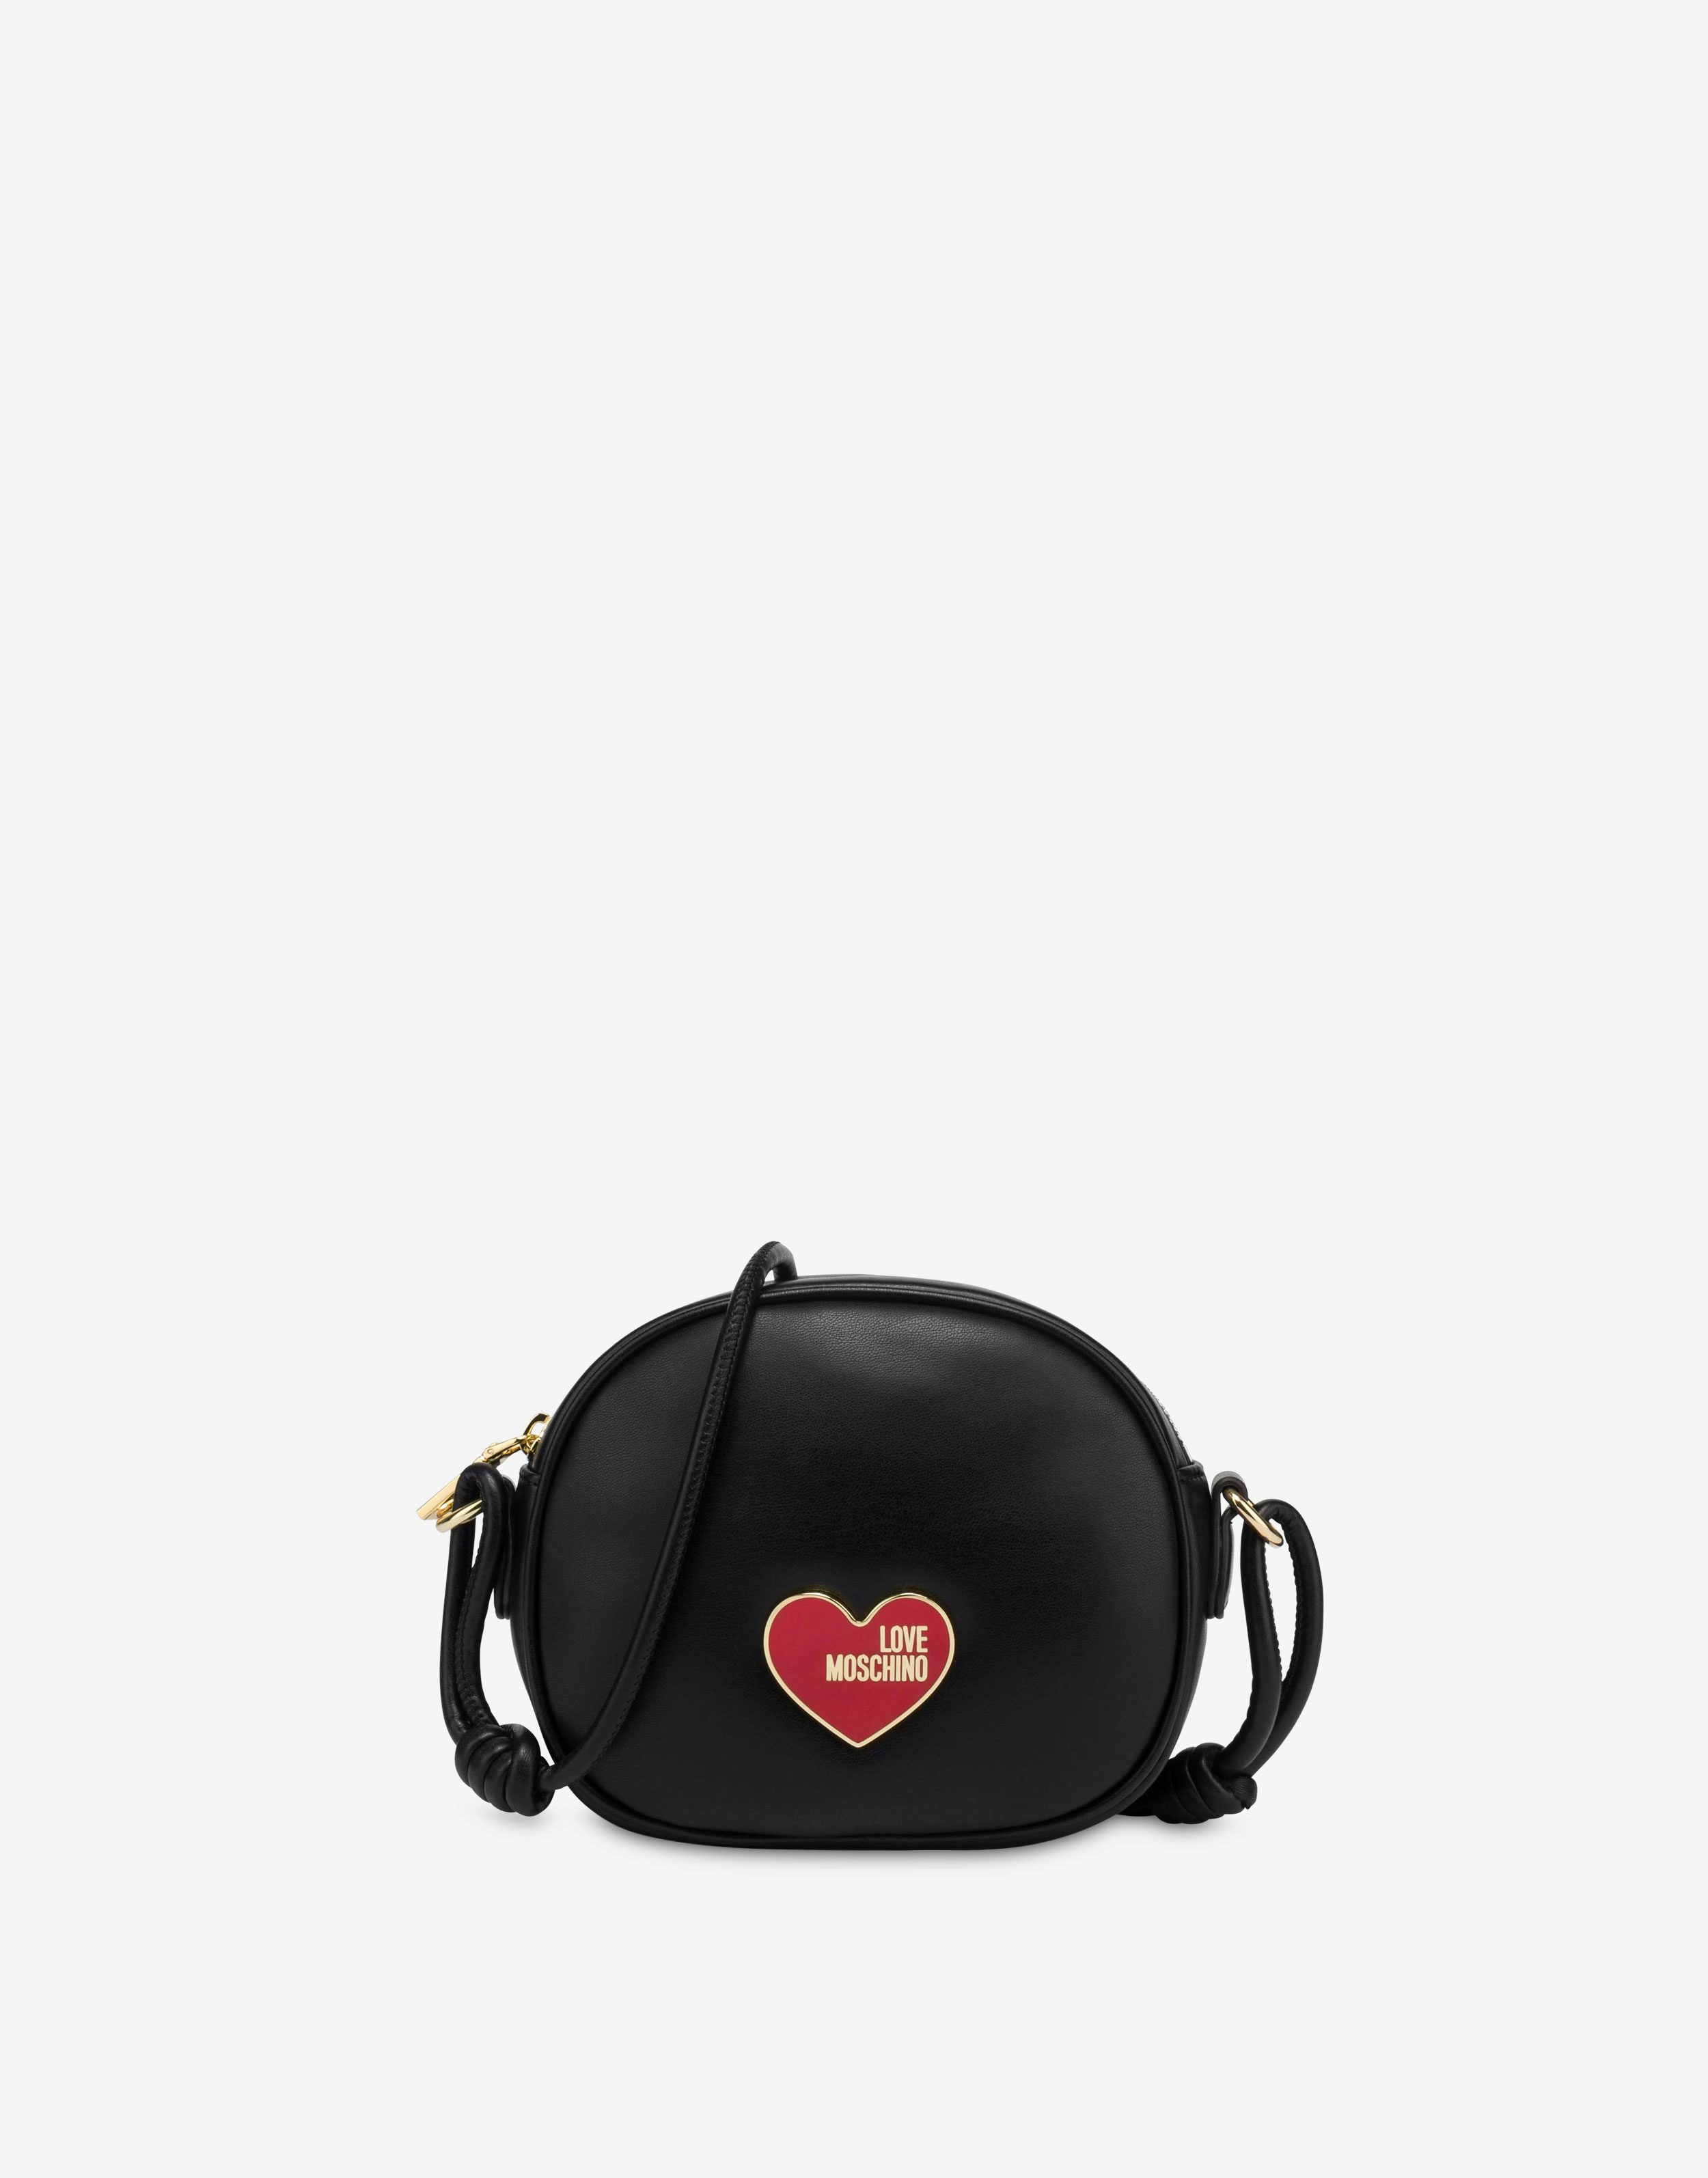 Moschino Handbags On Sale Deals | website.jkuat.ac.ke